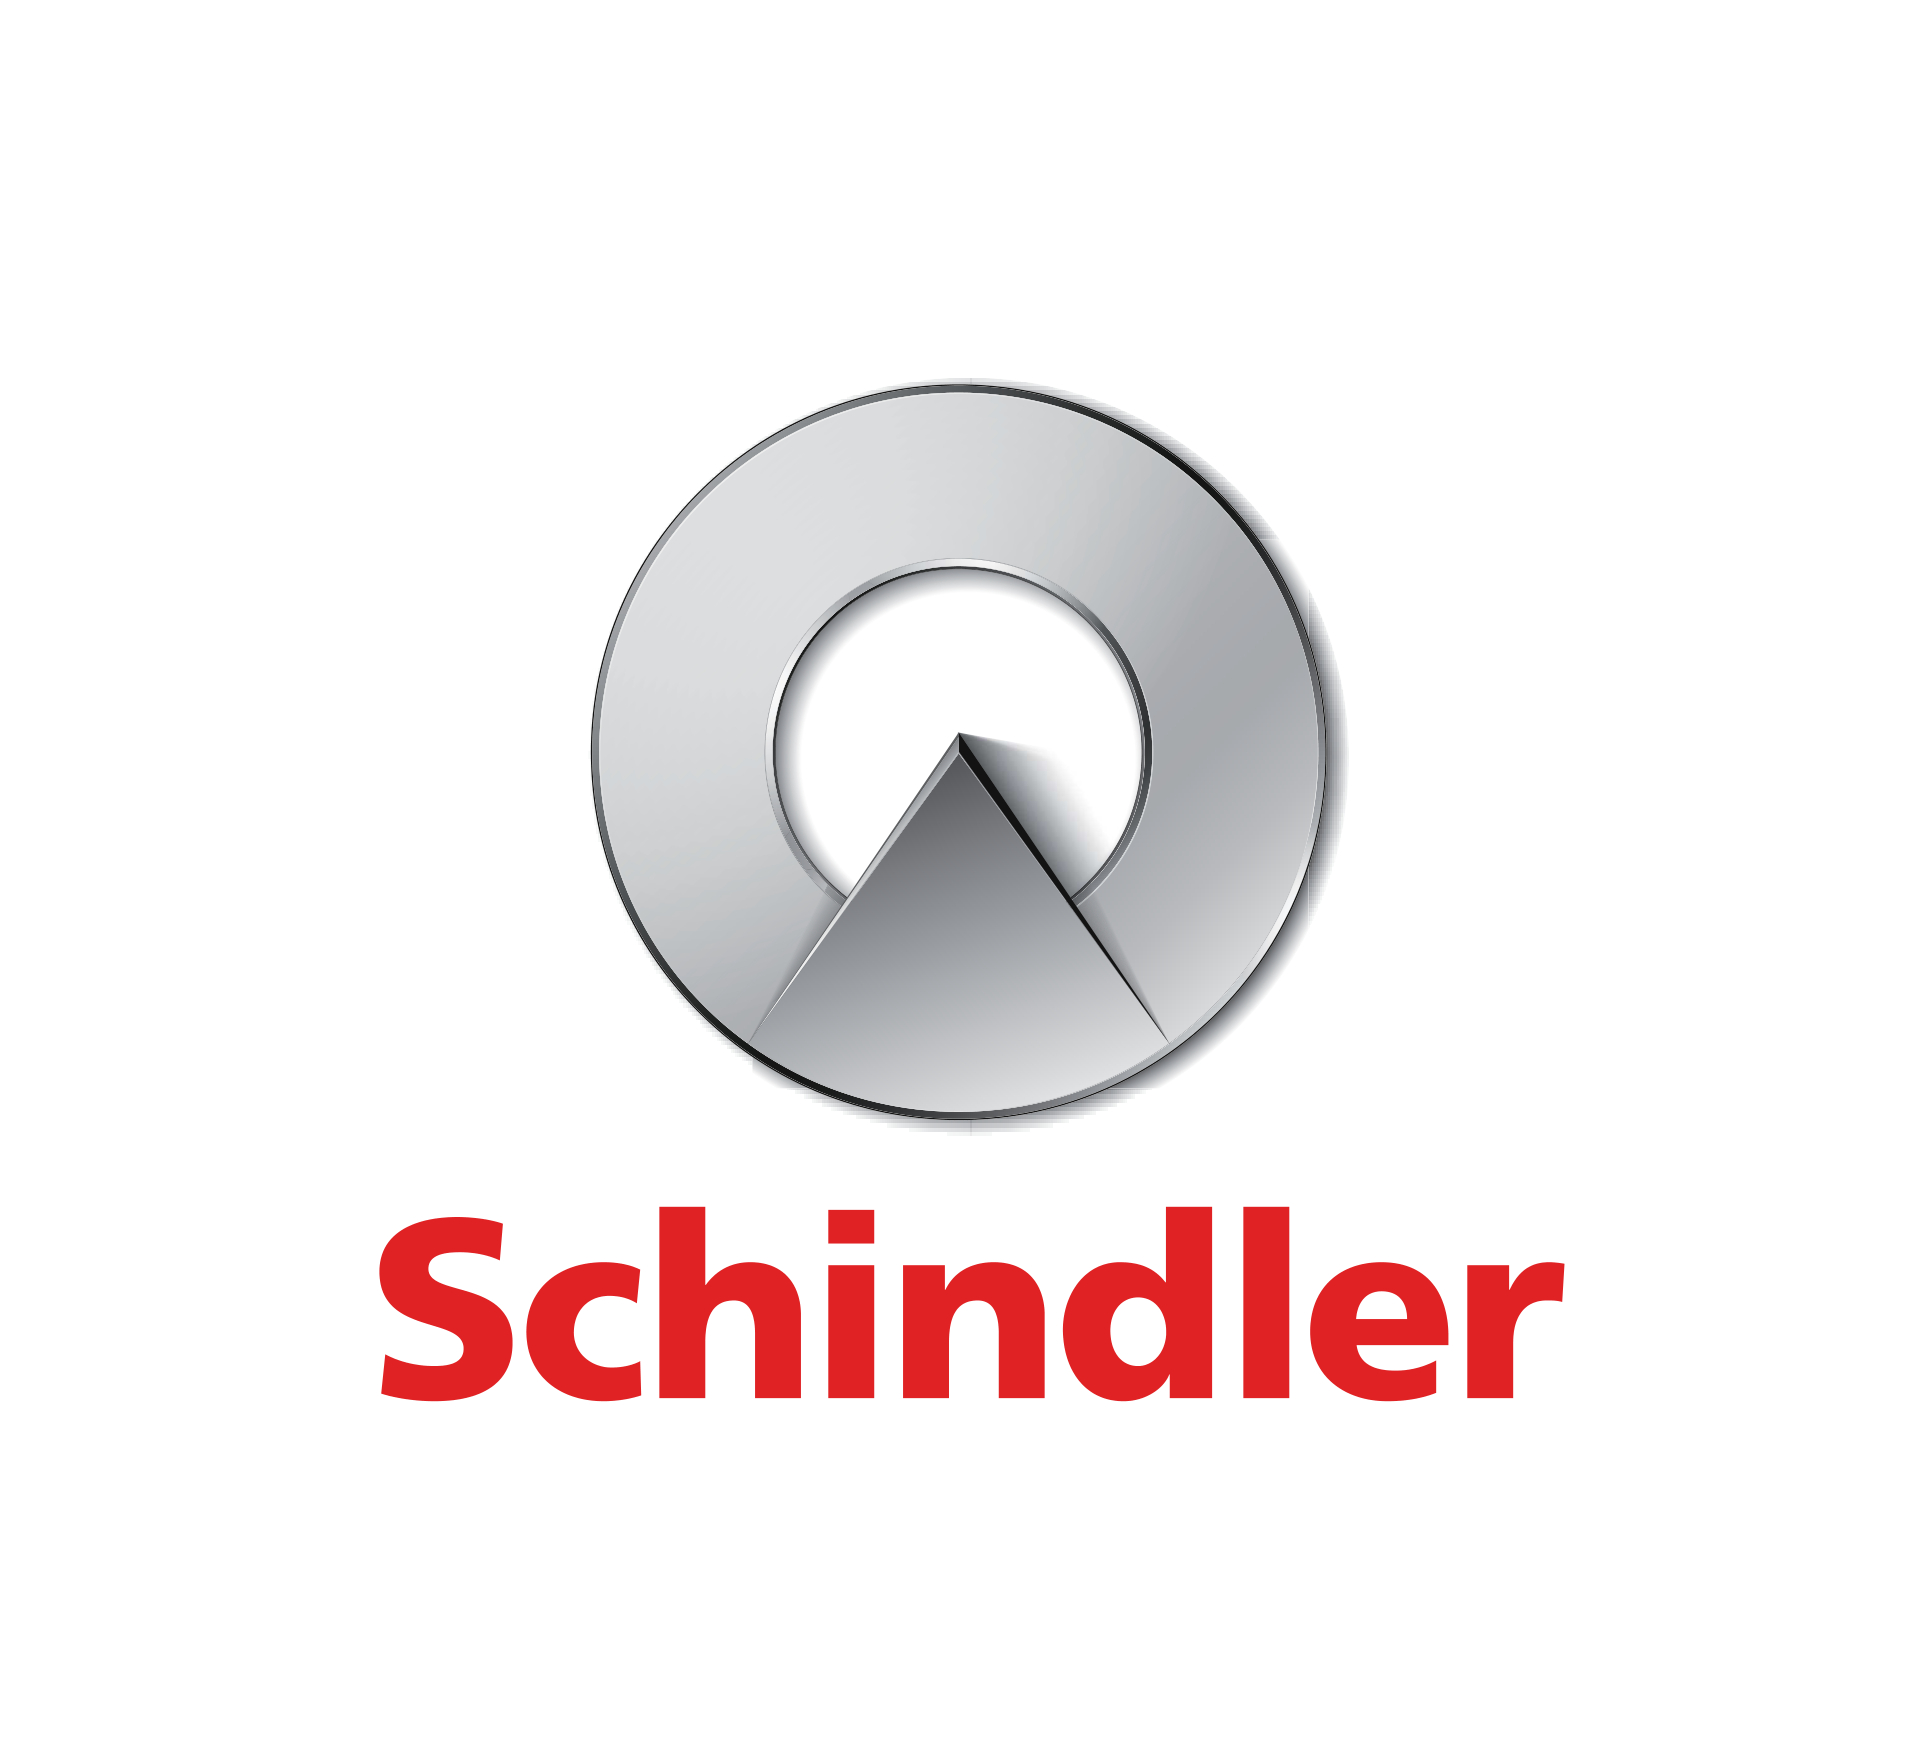 Schindler Education